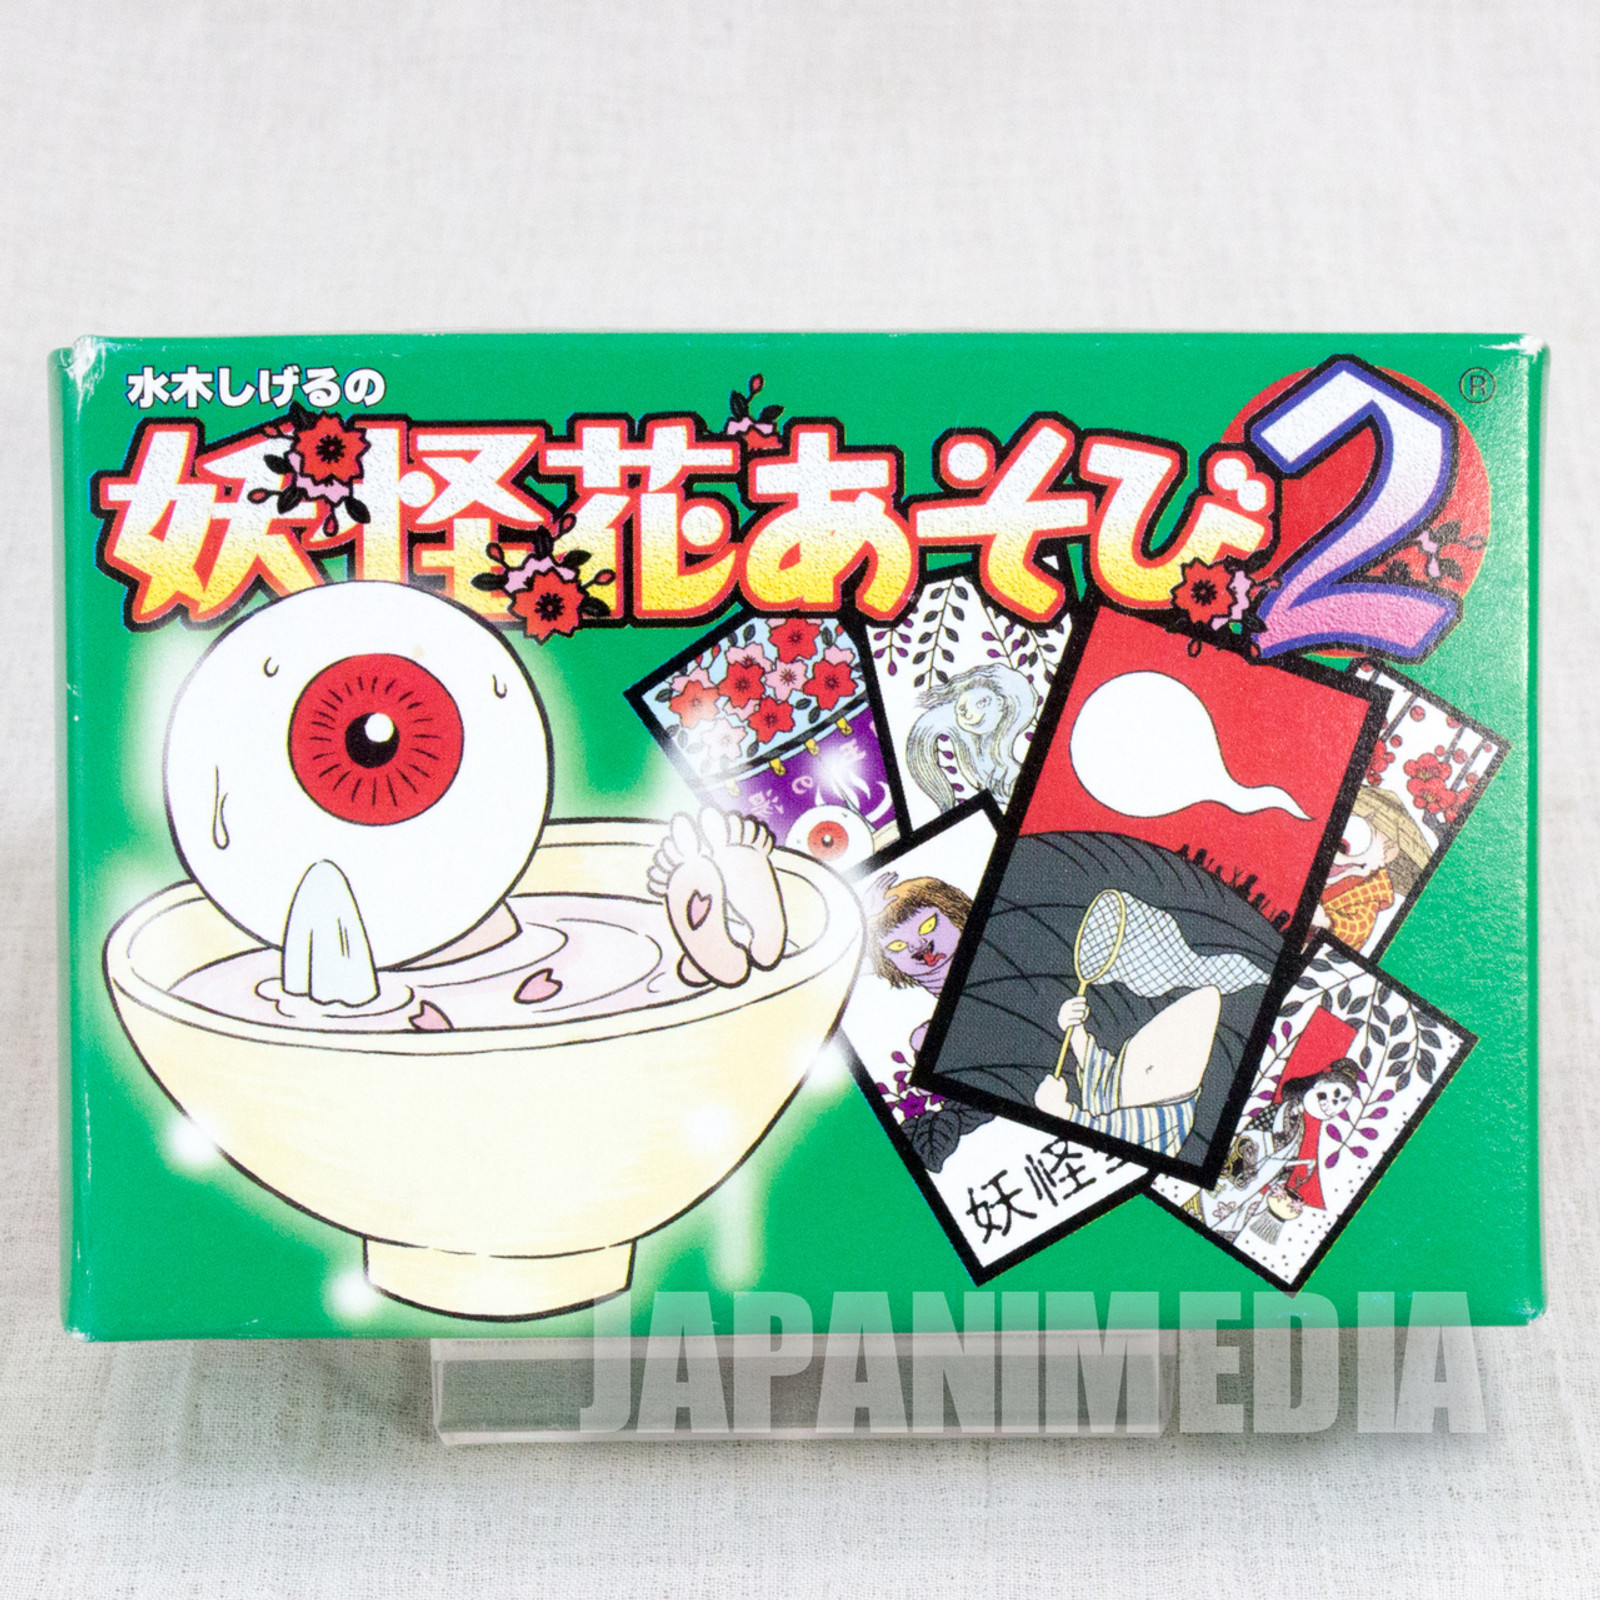 GeGeGe no Kitaro Hanafuda 2 Japanese Card Game 48pc JAPAN ANIME MANGA